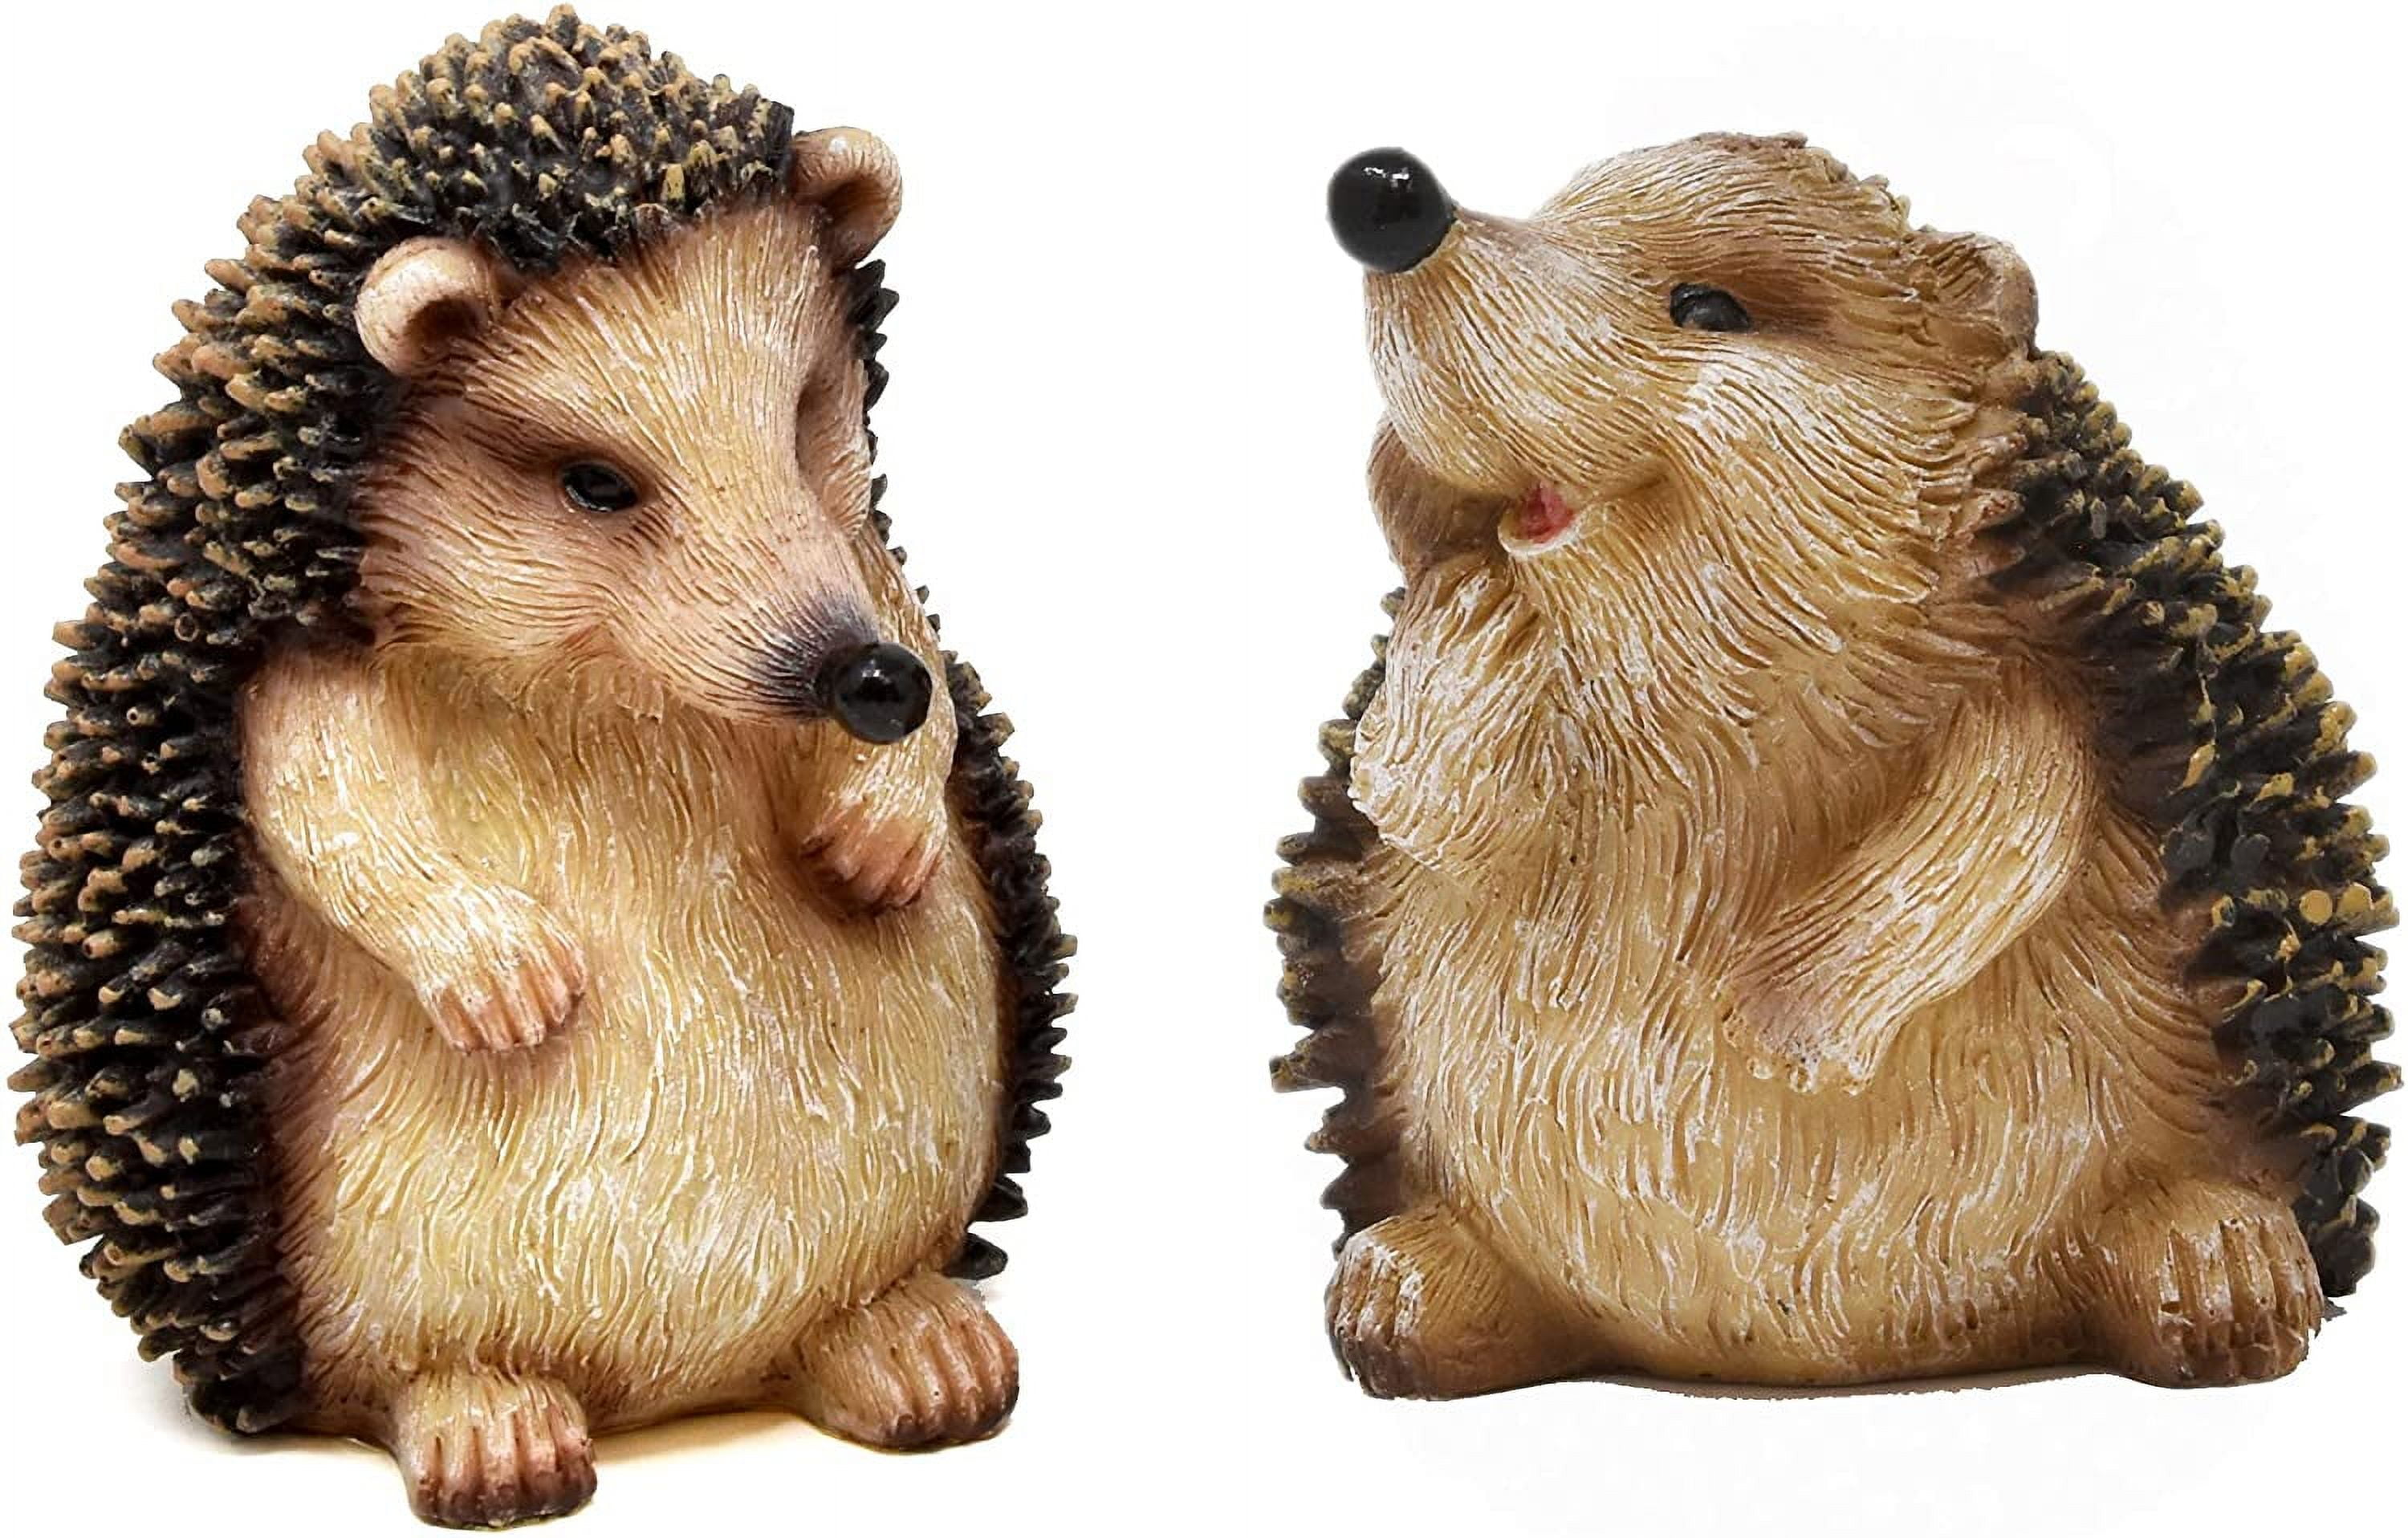 Aydinids 30 Pcs Mini Hedgehog Figurines Miniature Hedgehog Realistic Forest  Animal Models for Fairy Garden Moss Landscape DIY Garden Decor